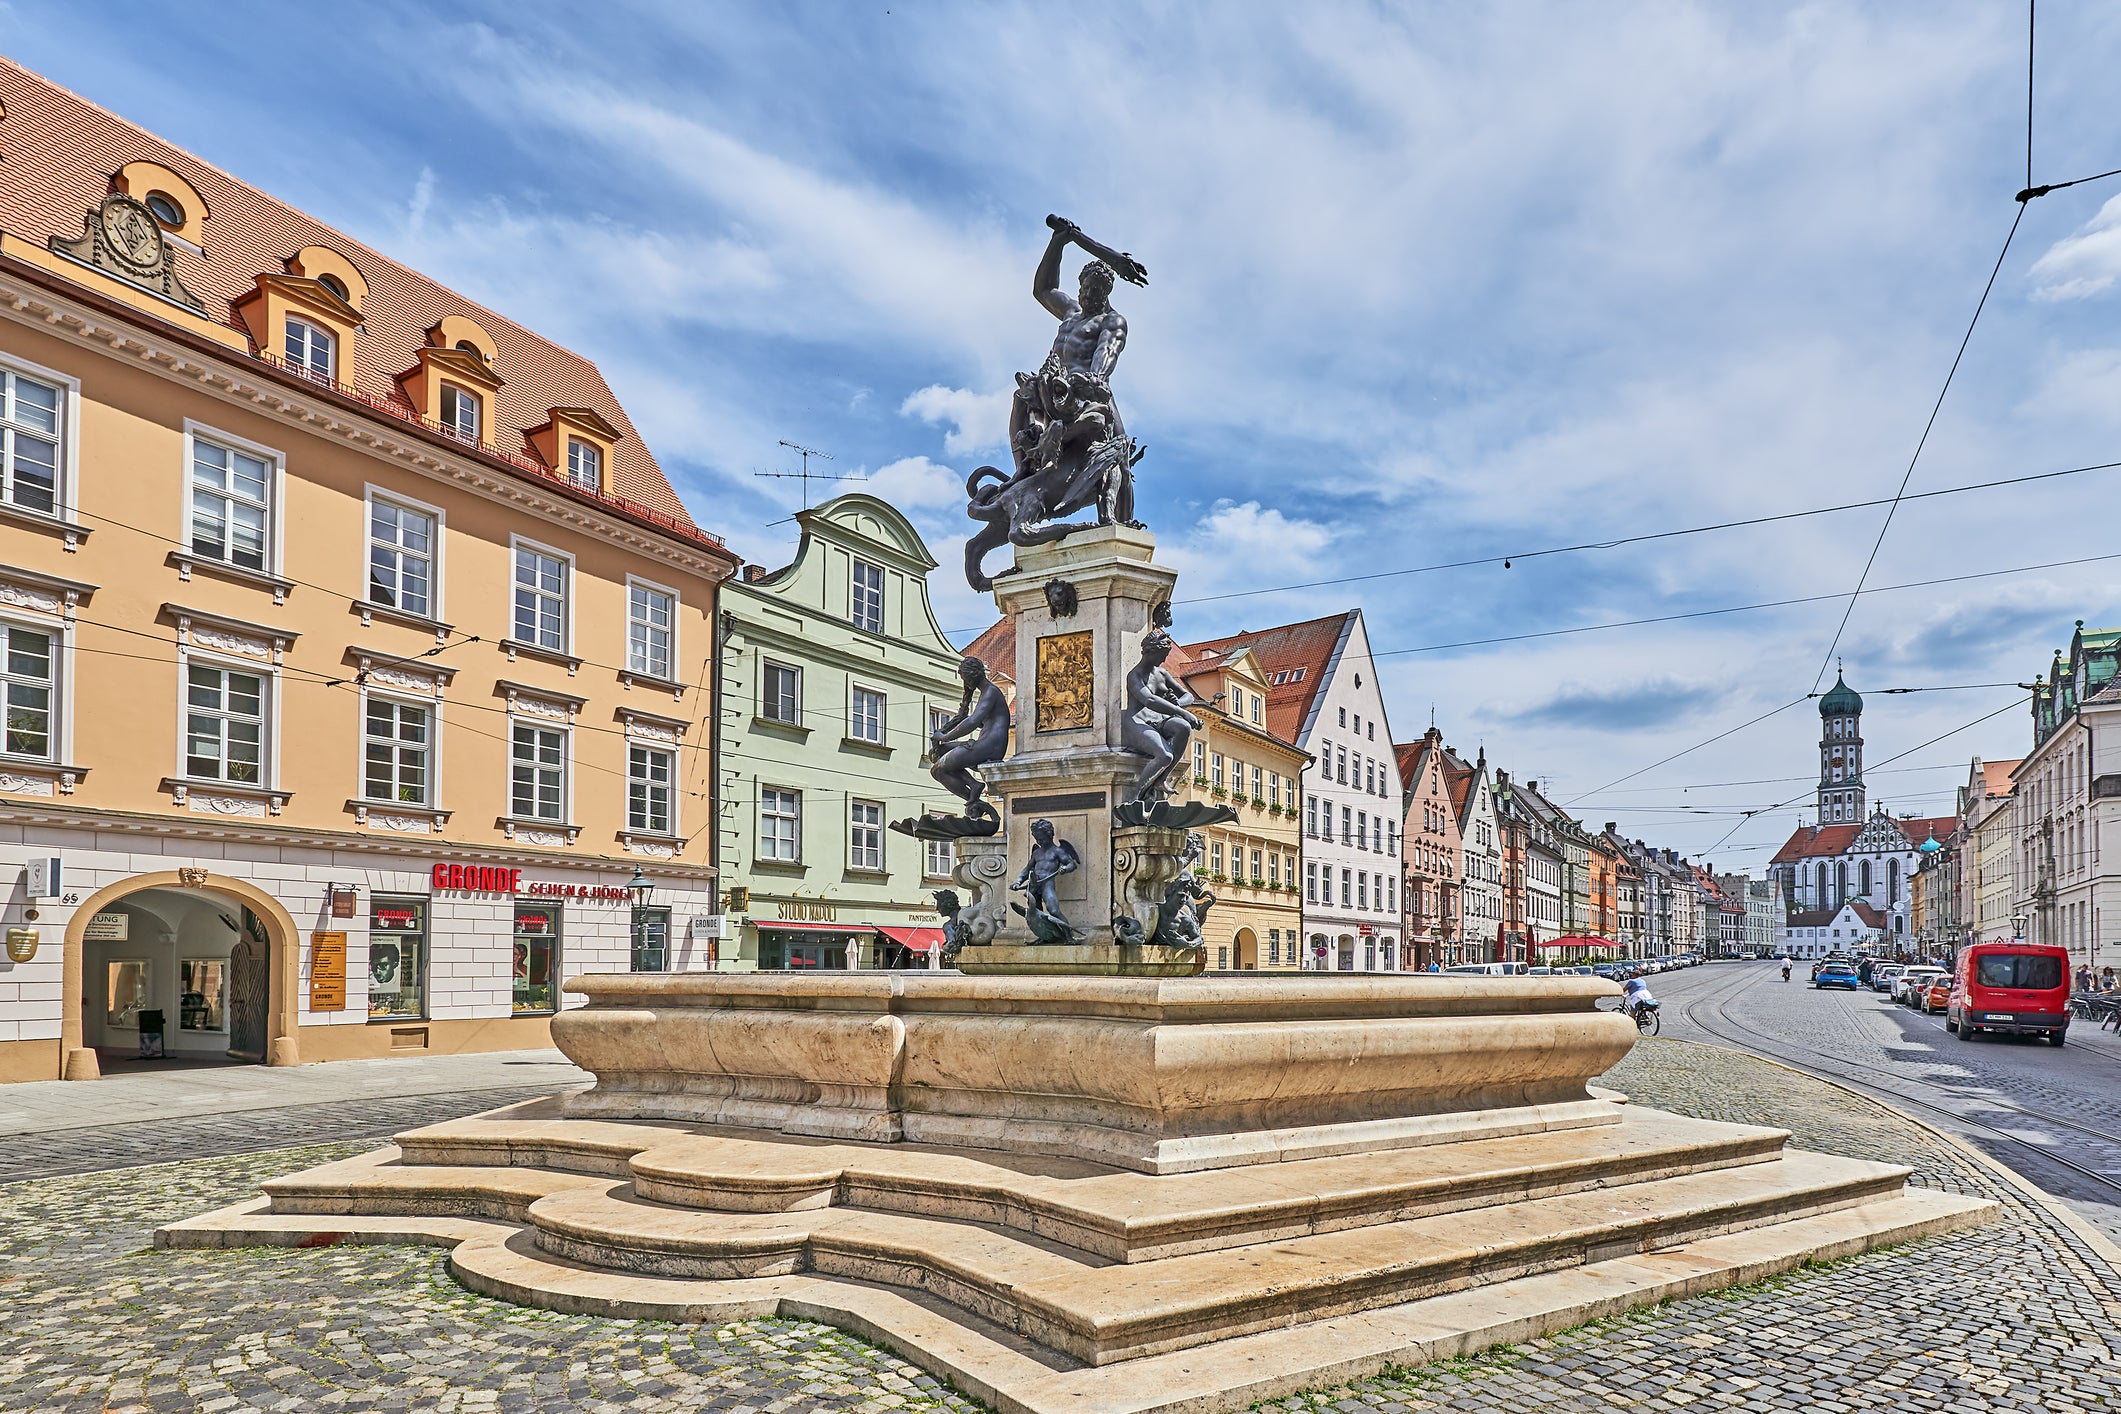 Around 50km west of Munich, Augsburg has been charming travellers for centuries